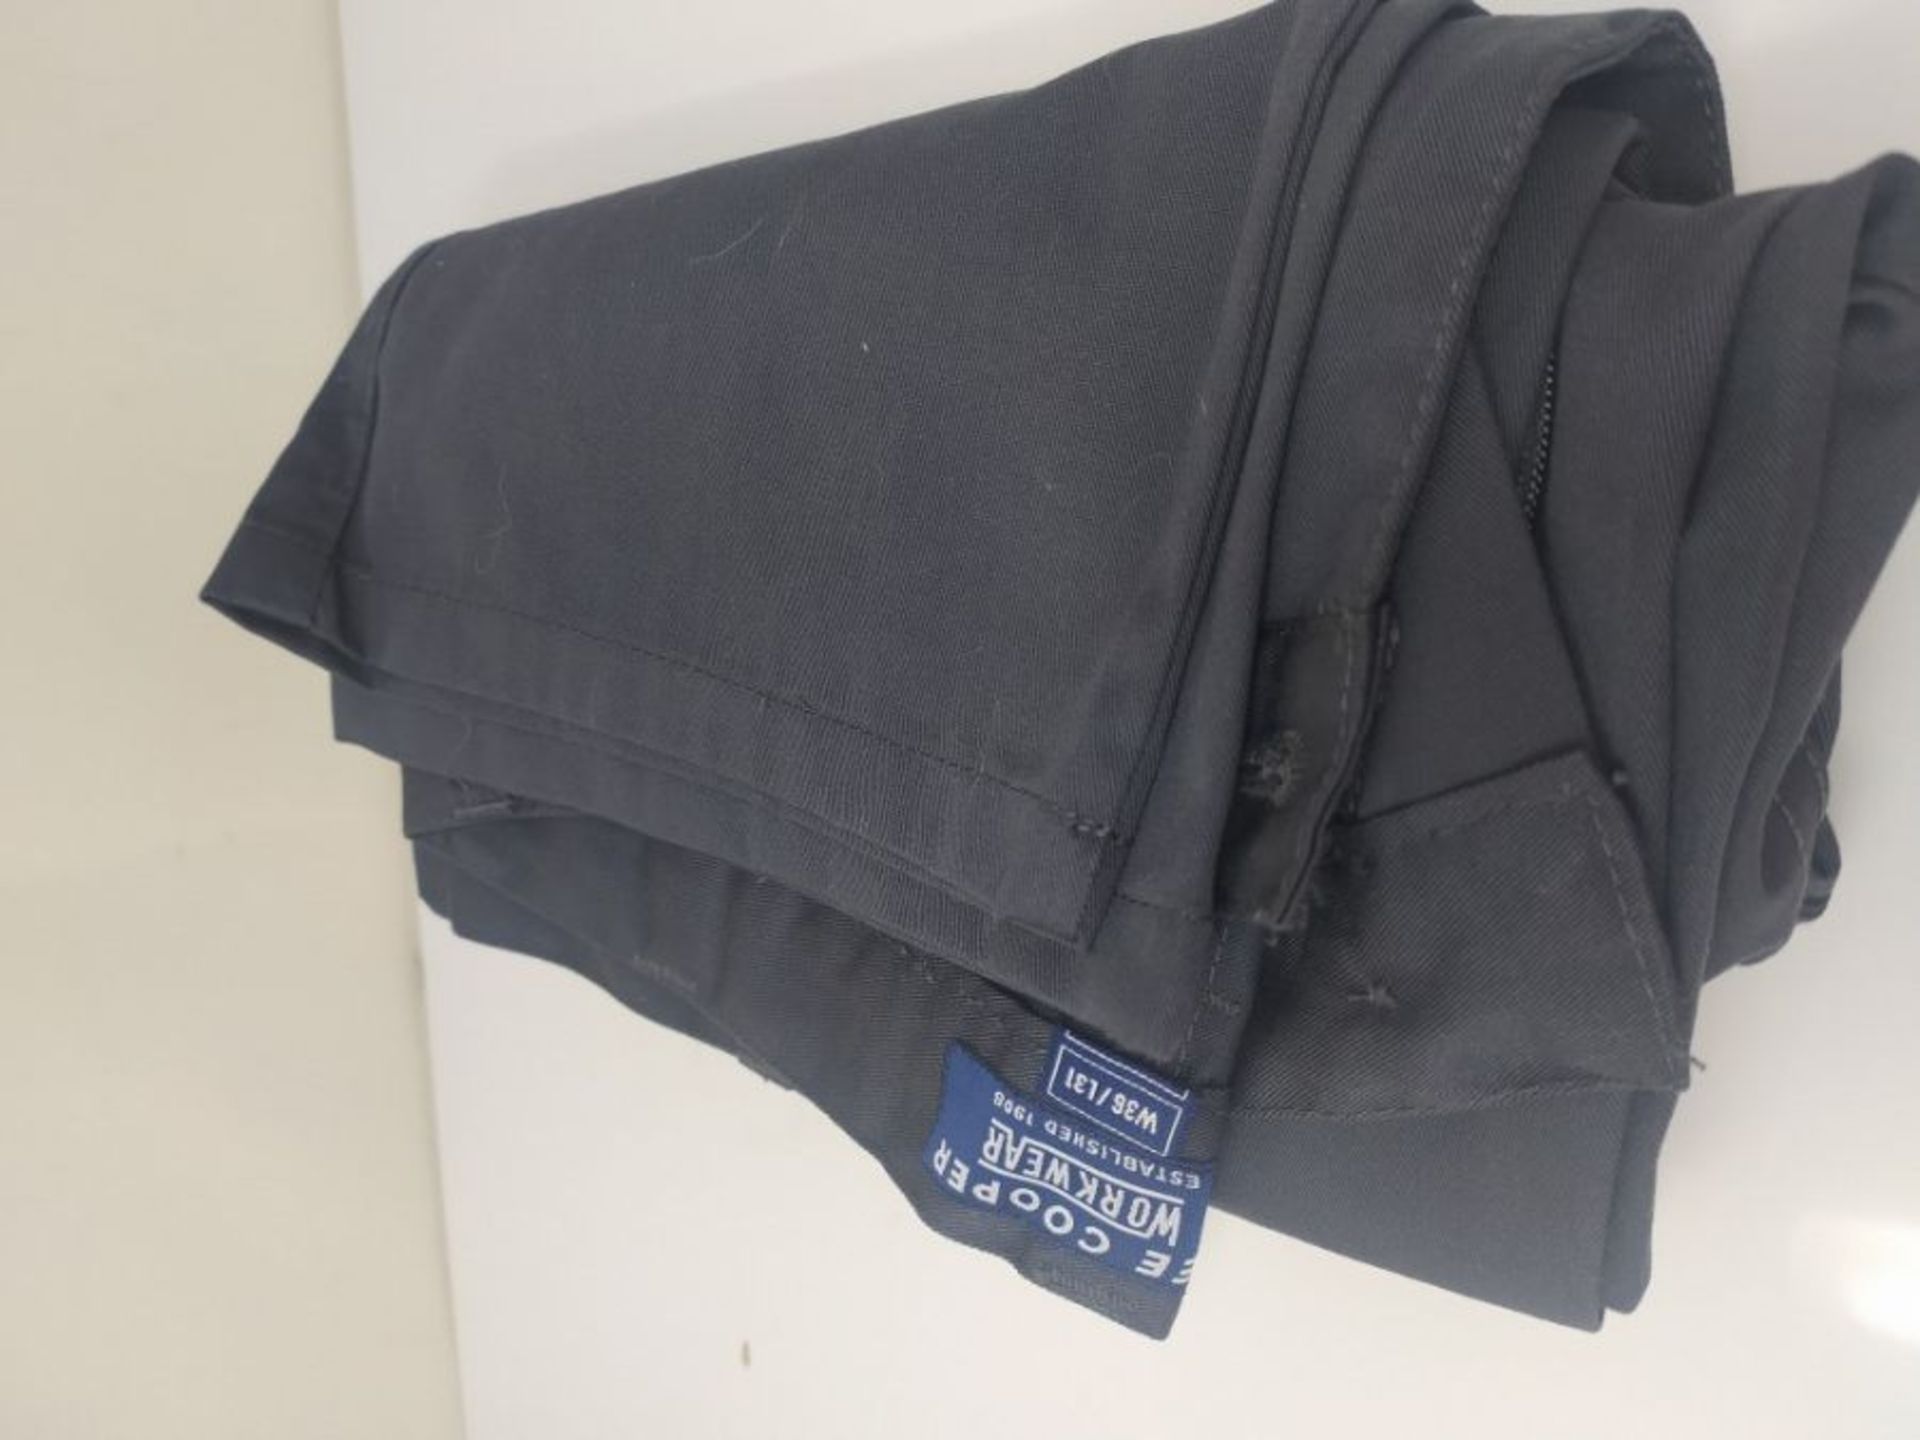 Lee Cooper Mens Classic Workwear Pant Cargo Trouser, Grey, 36W/31L (Regular) - Image 2 of 2